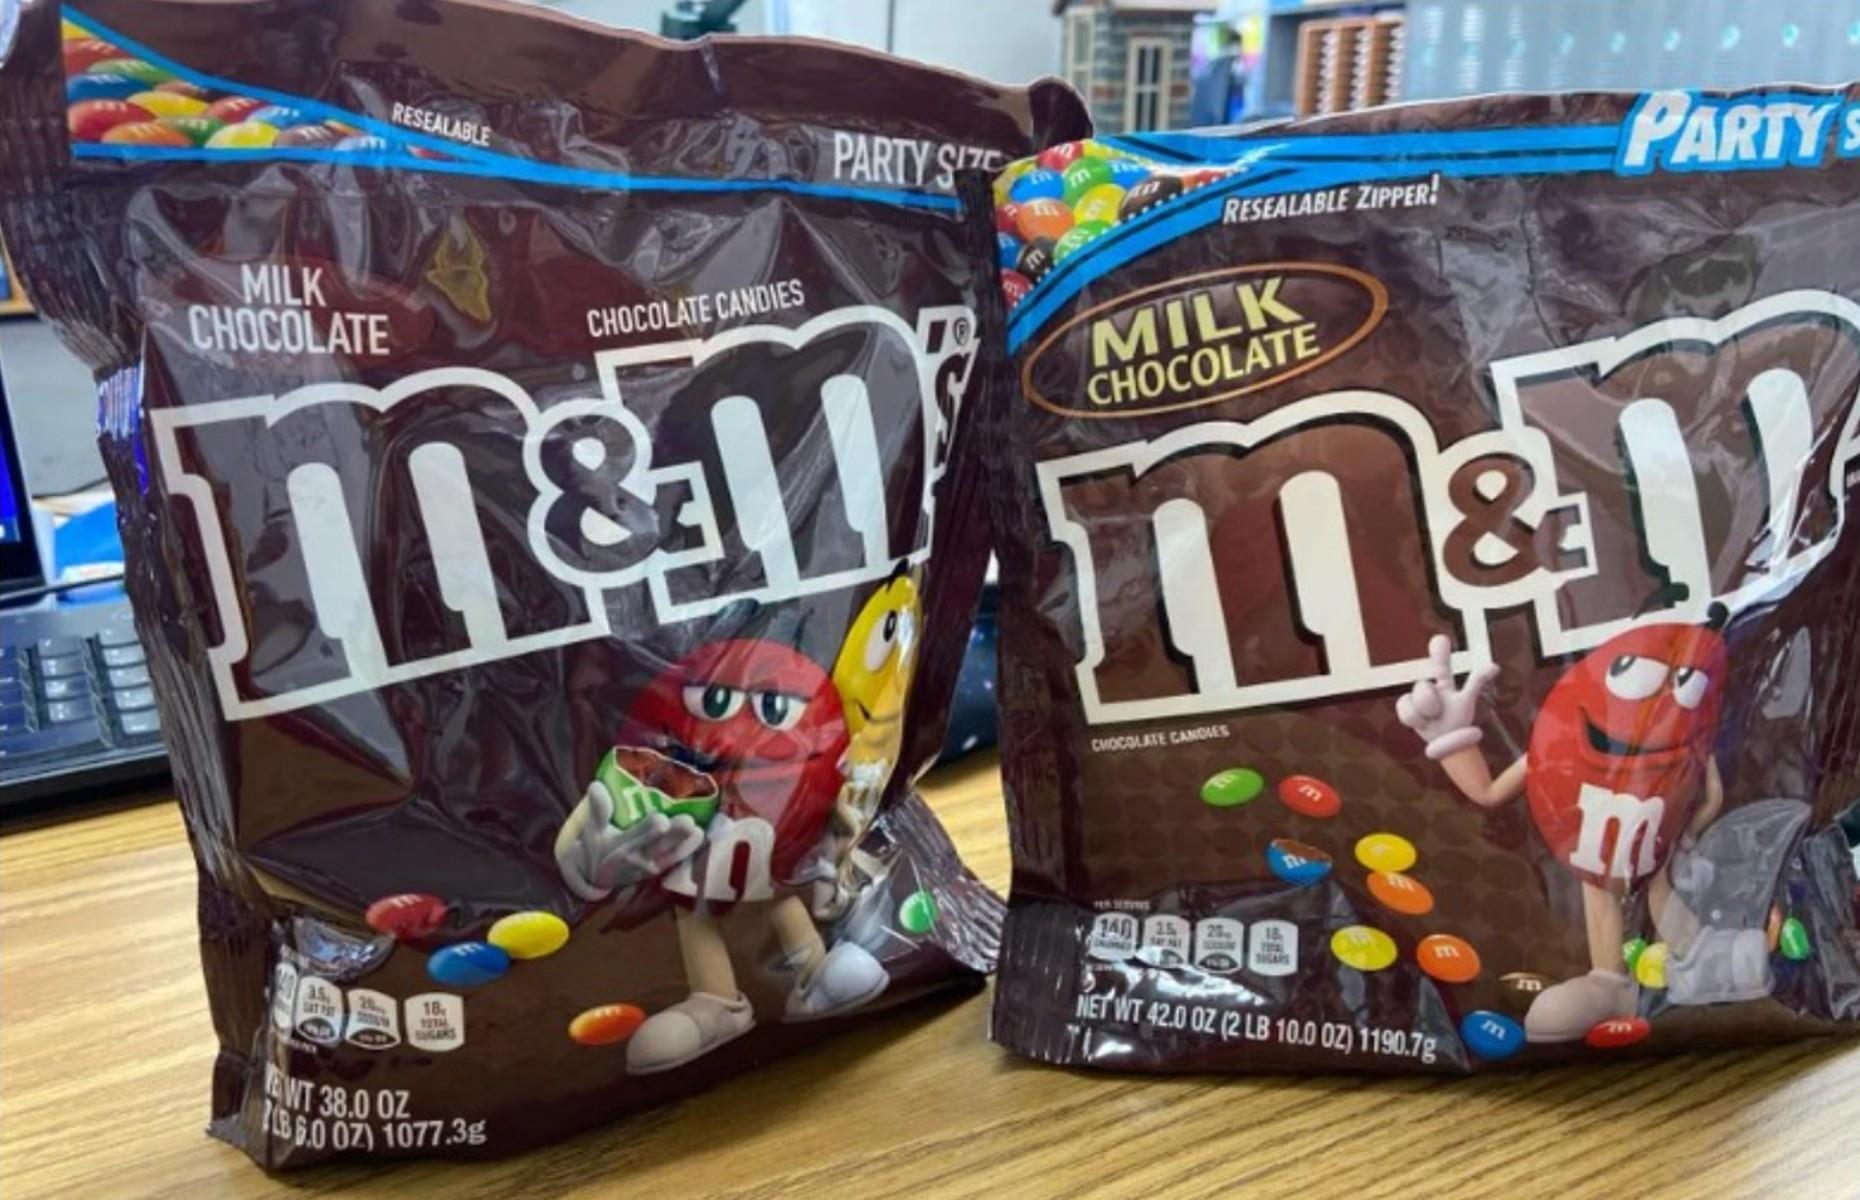 M&M'S Milk Chocolate Candy Party Size Bag, 38 oz - Kroger